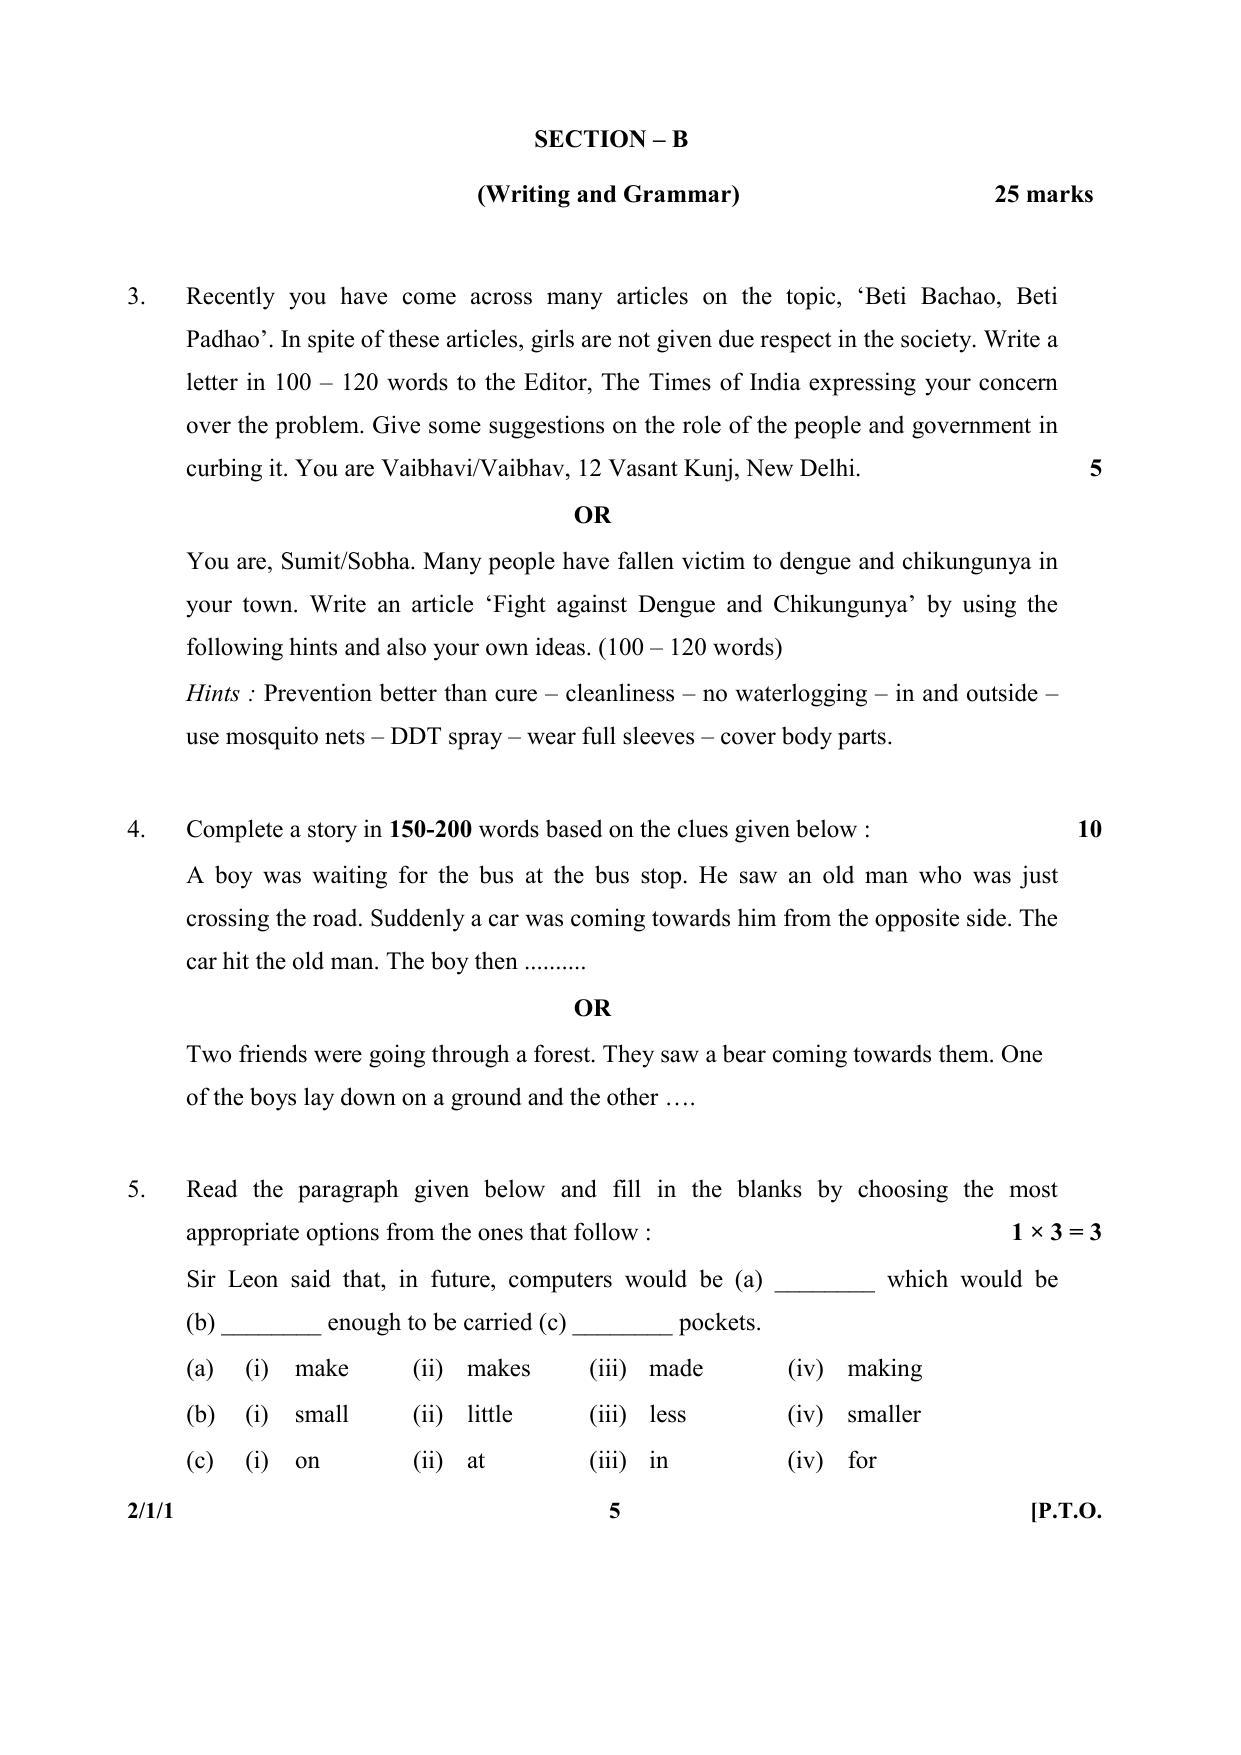 CBSE Class 10 2-1-1 (English Lan. & Lit.) 2017-comptt Question Paper - Page 5